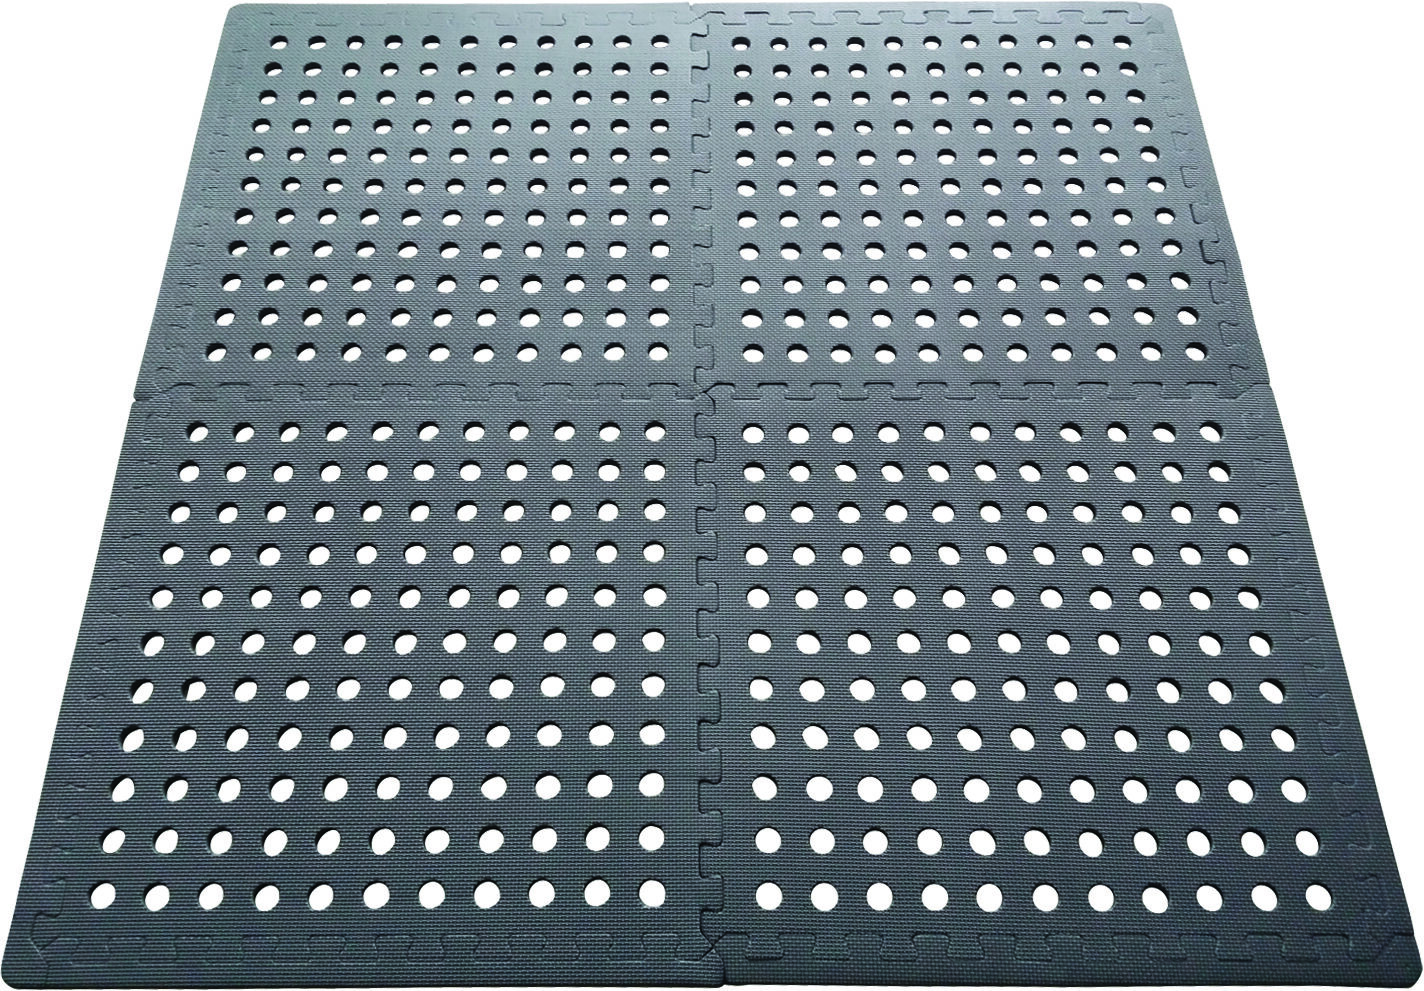 foam camping floor mats